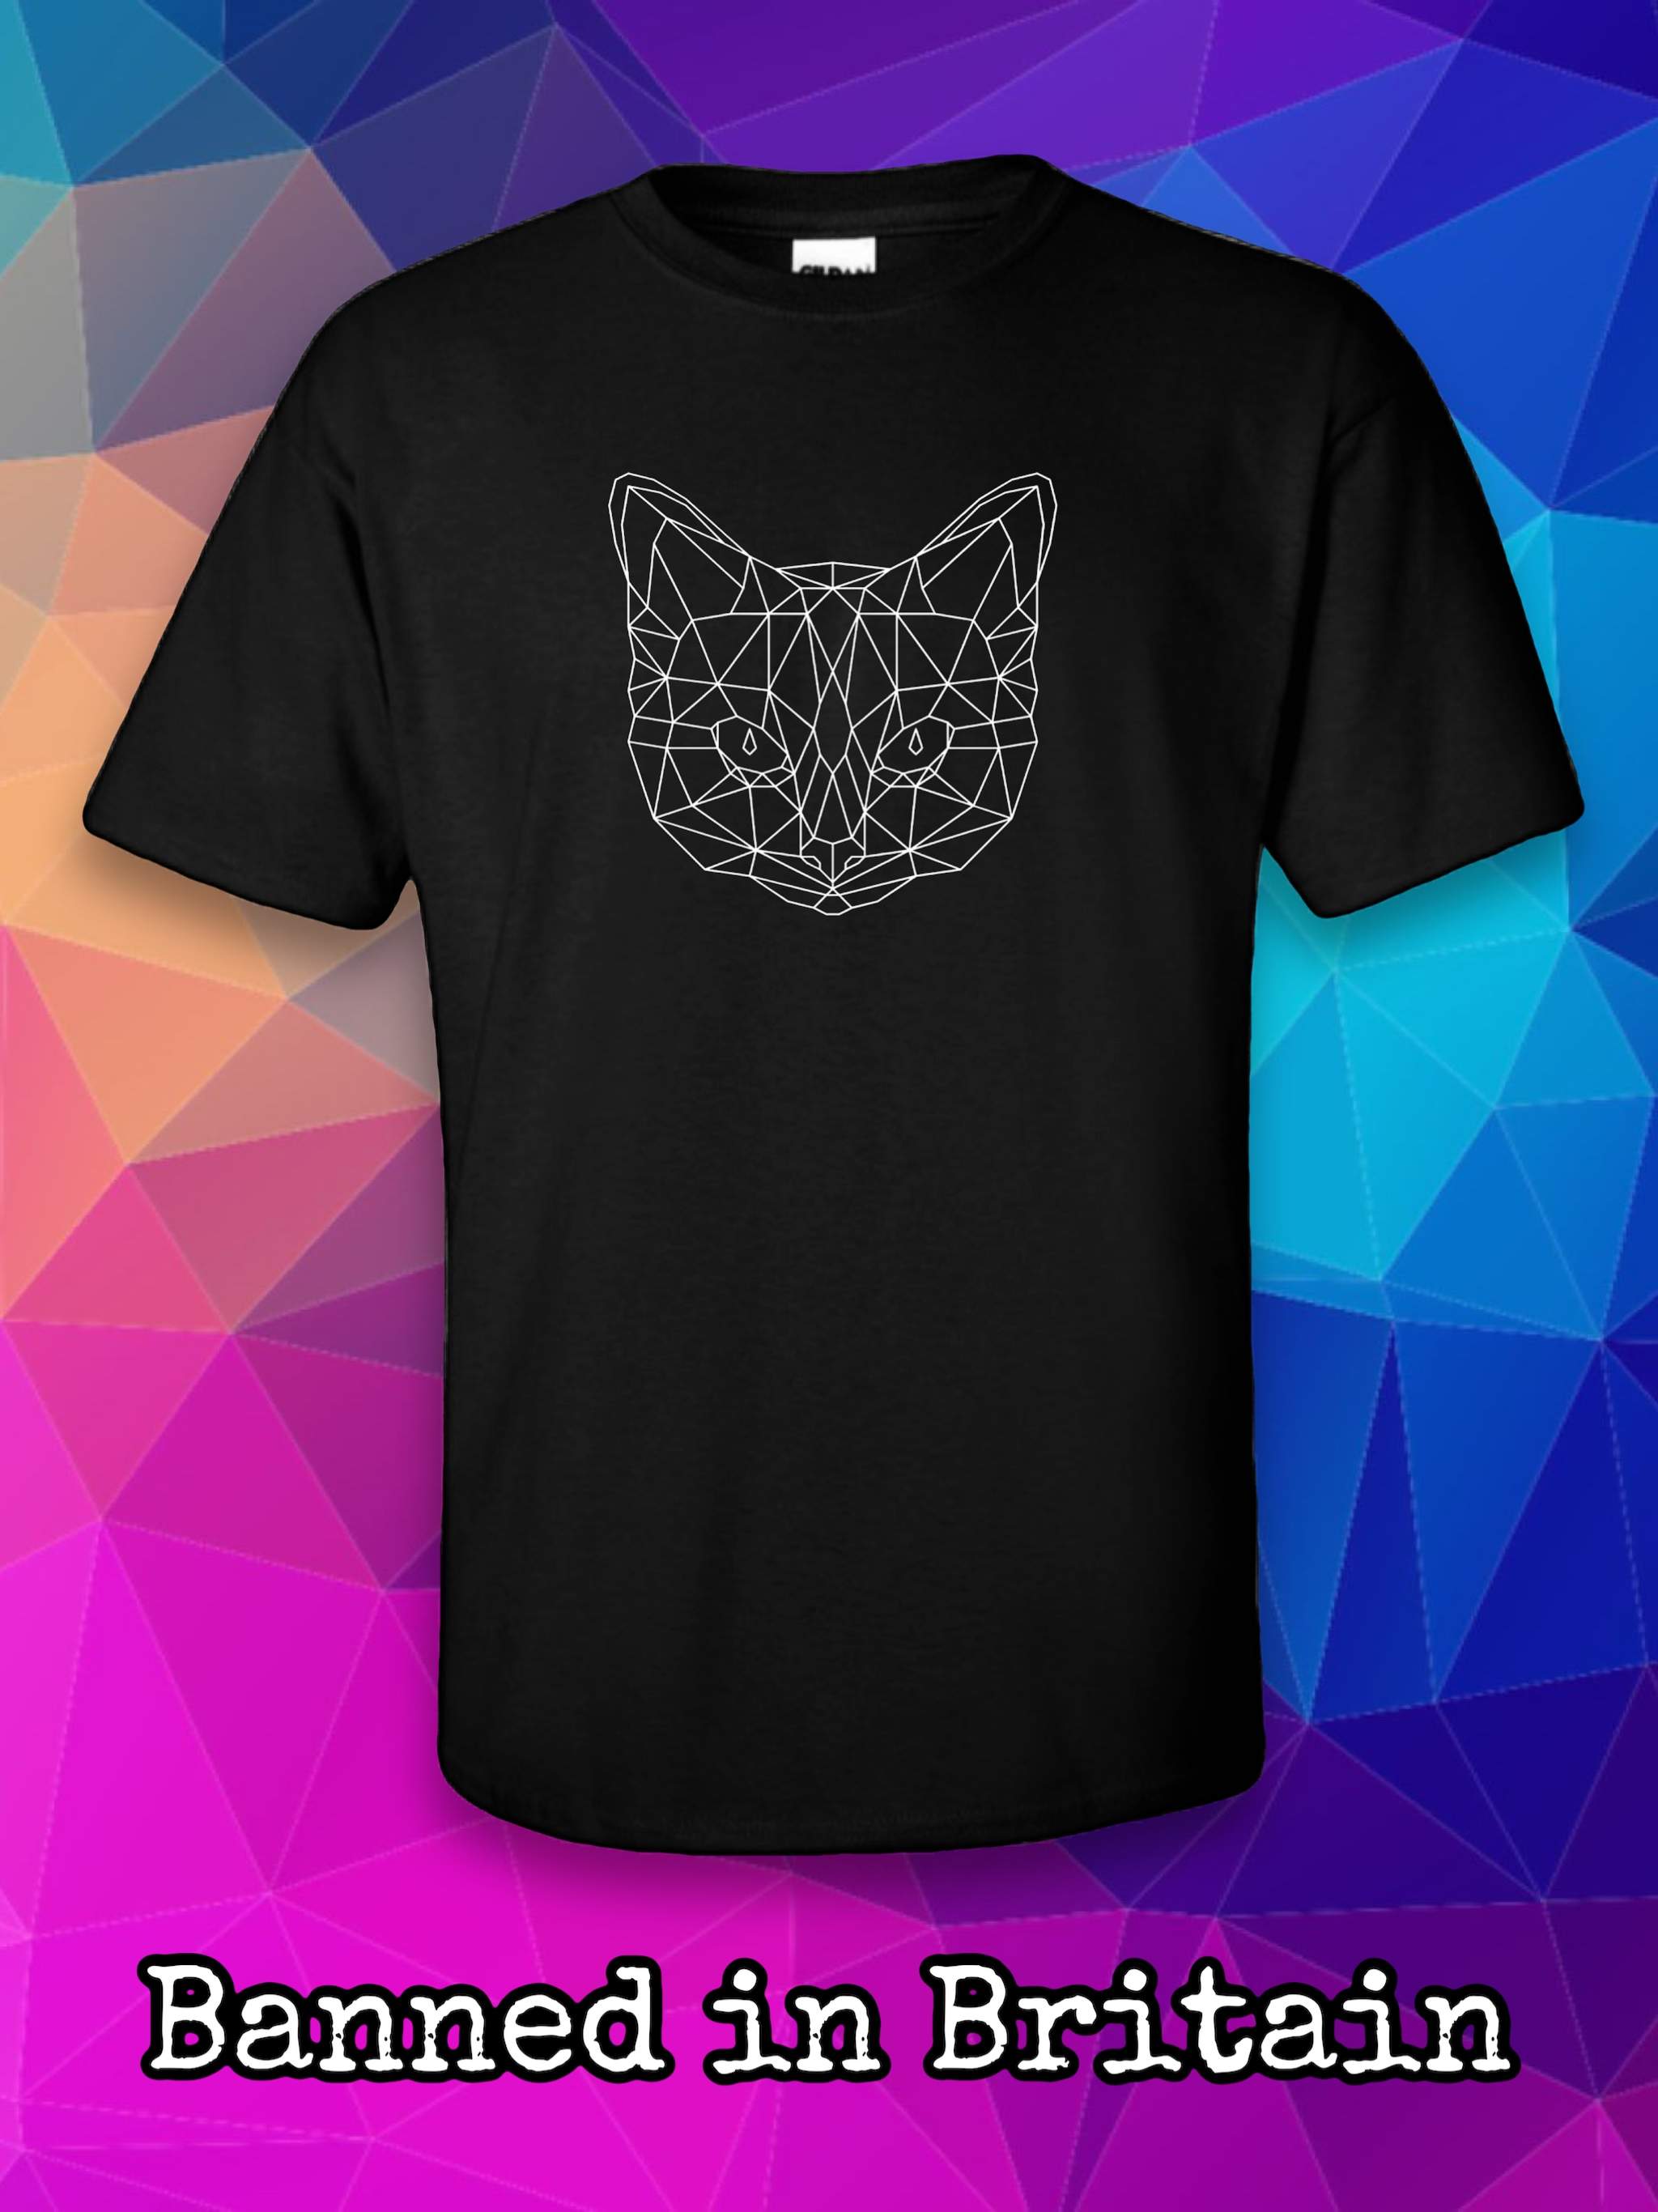 Geometric Animal T-Shirts